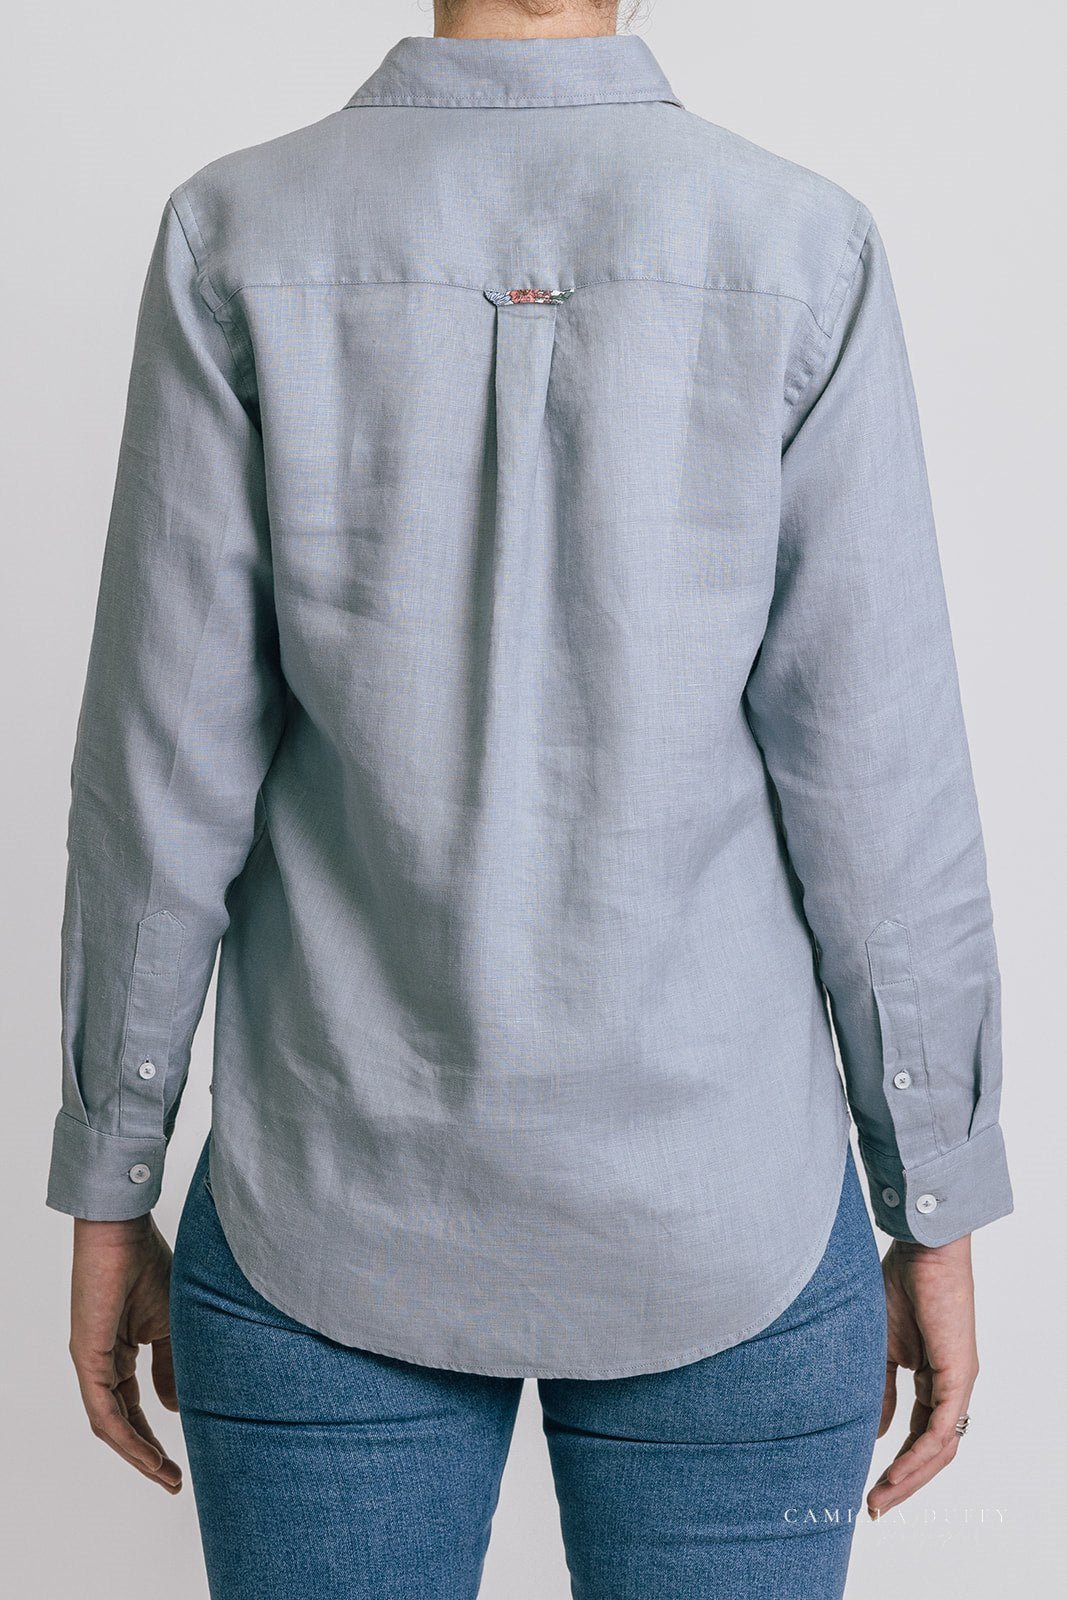 PREORDER Julia Linen Shirt - H&S Heritage